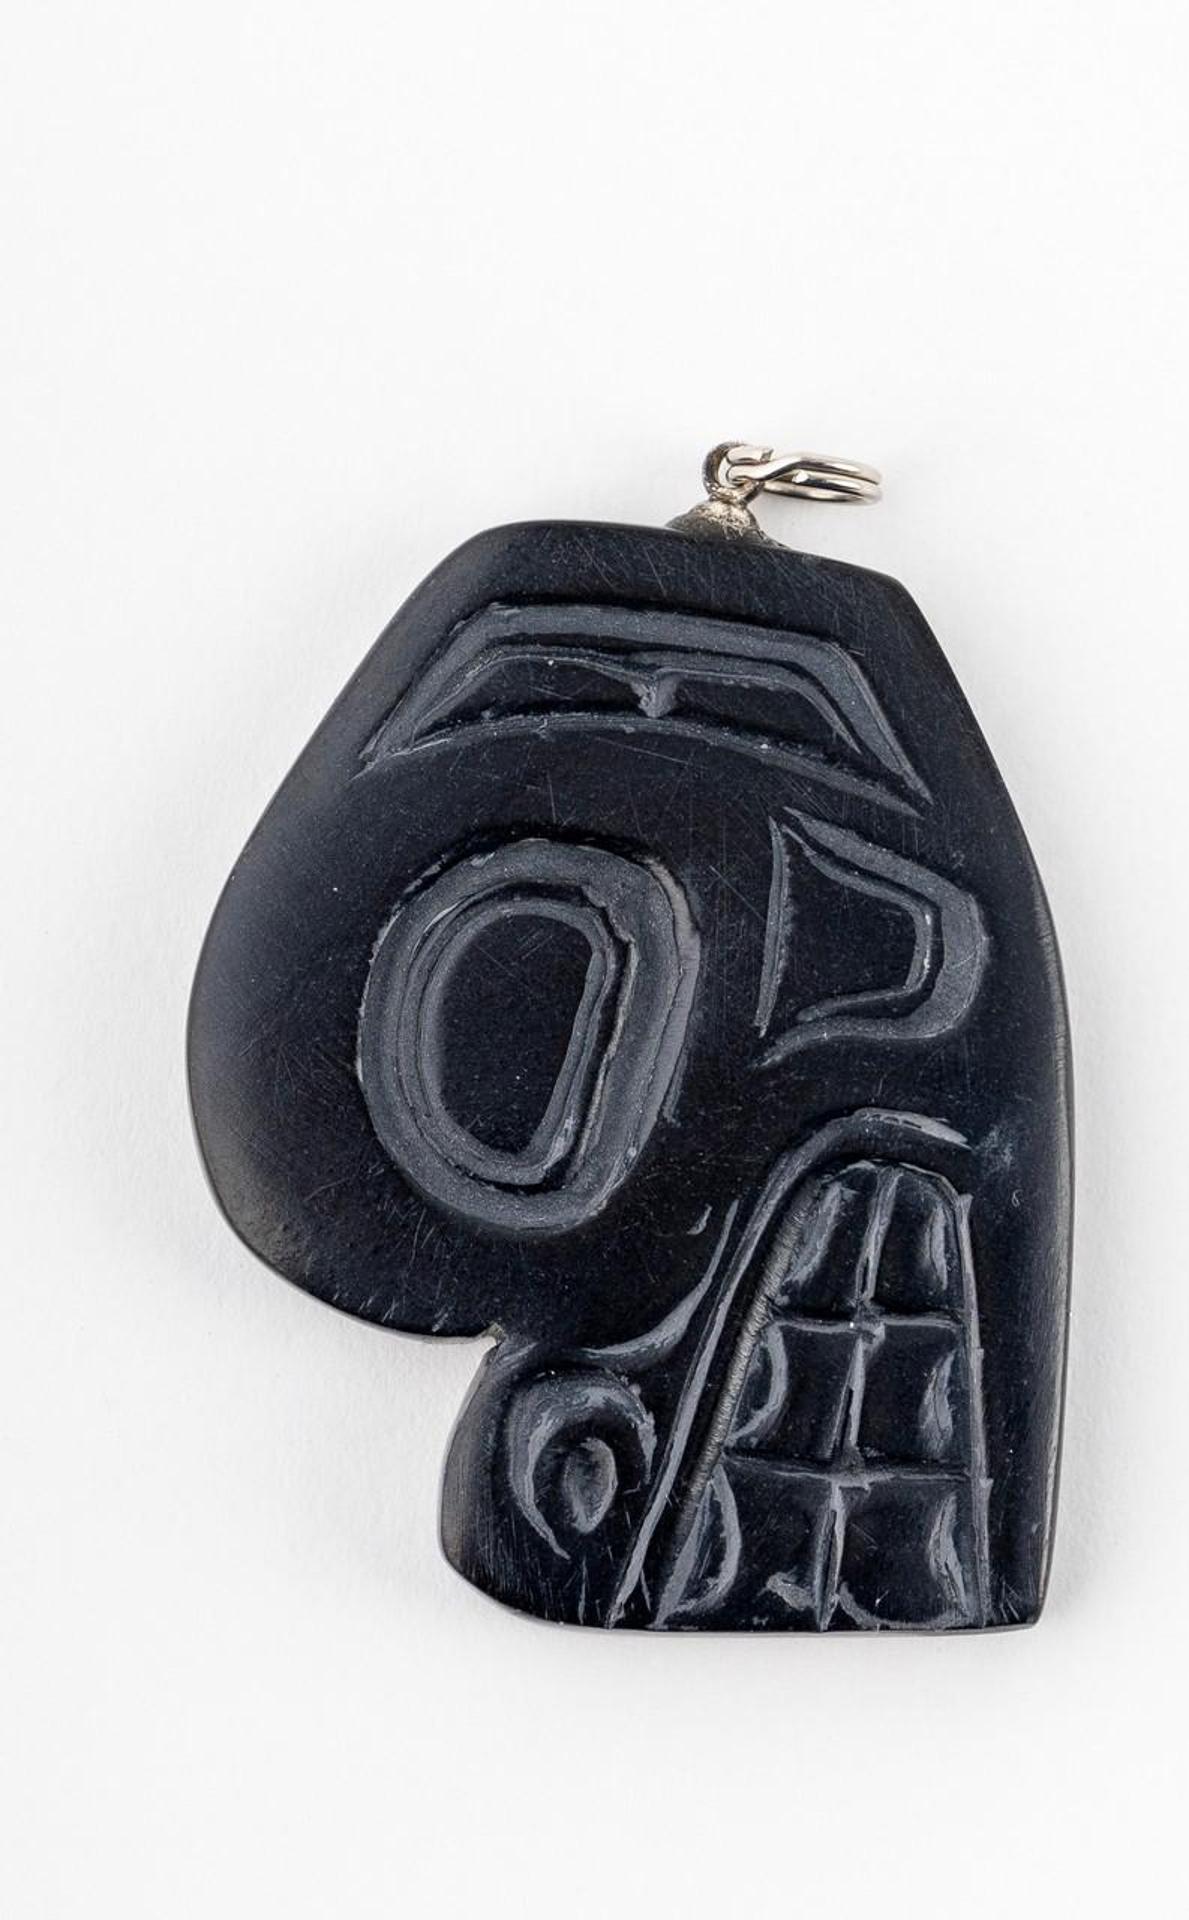 Gryn White - a carved argillite pendant depicting Bear